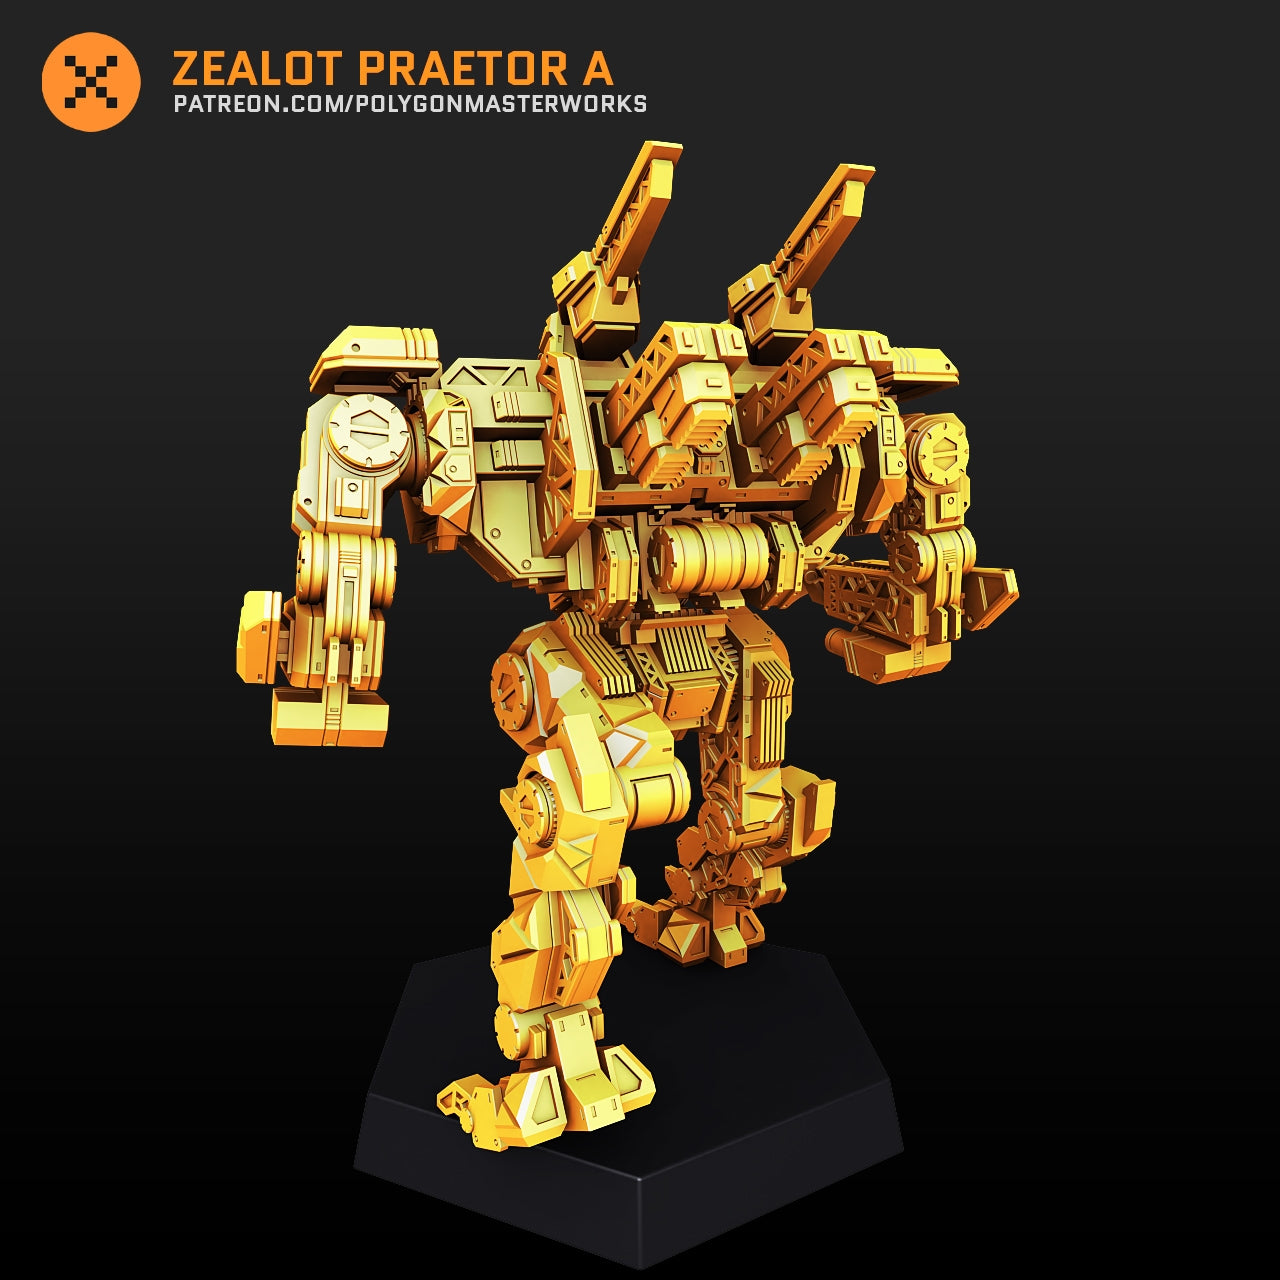 Zealot Praetor A (By PMW) Alternate Battletech Mechwarrior Miniatures